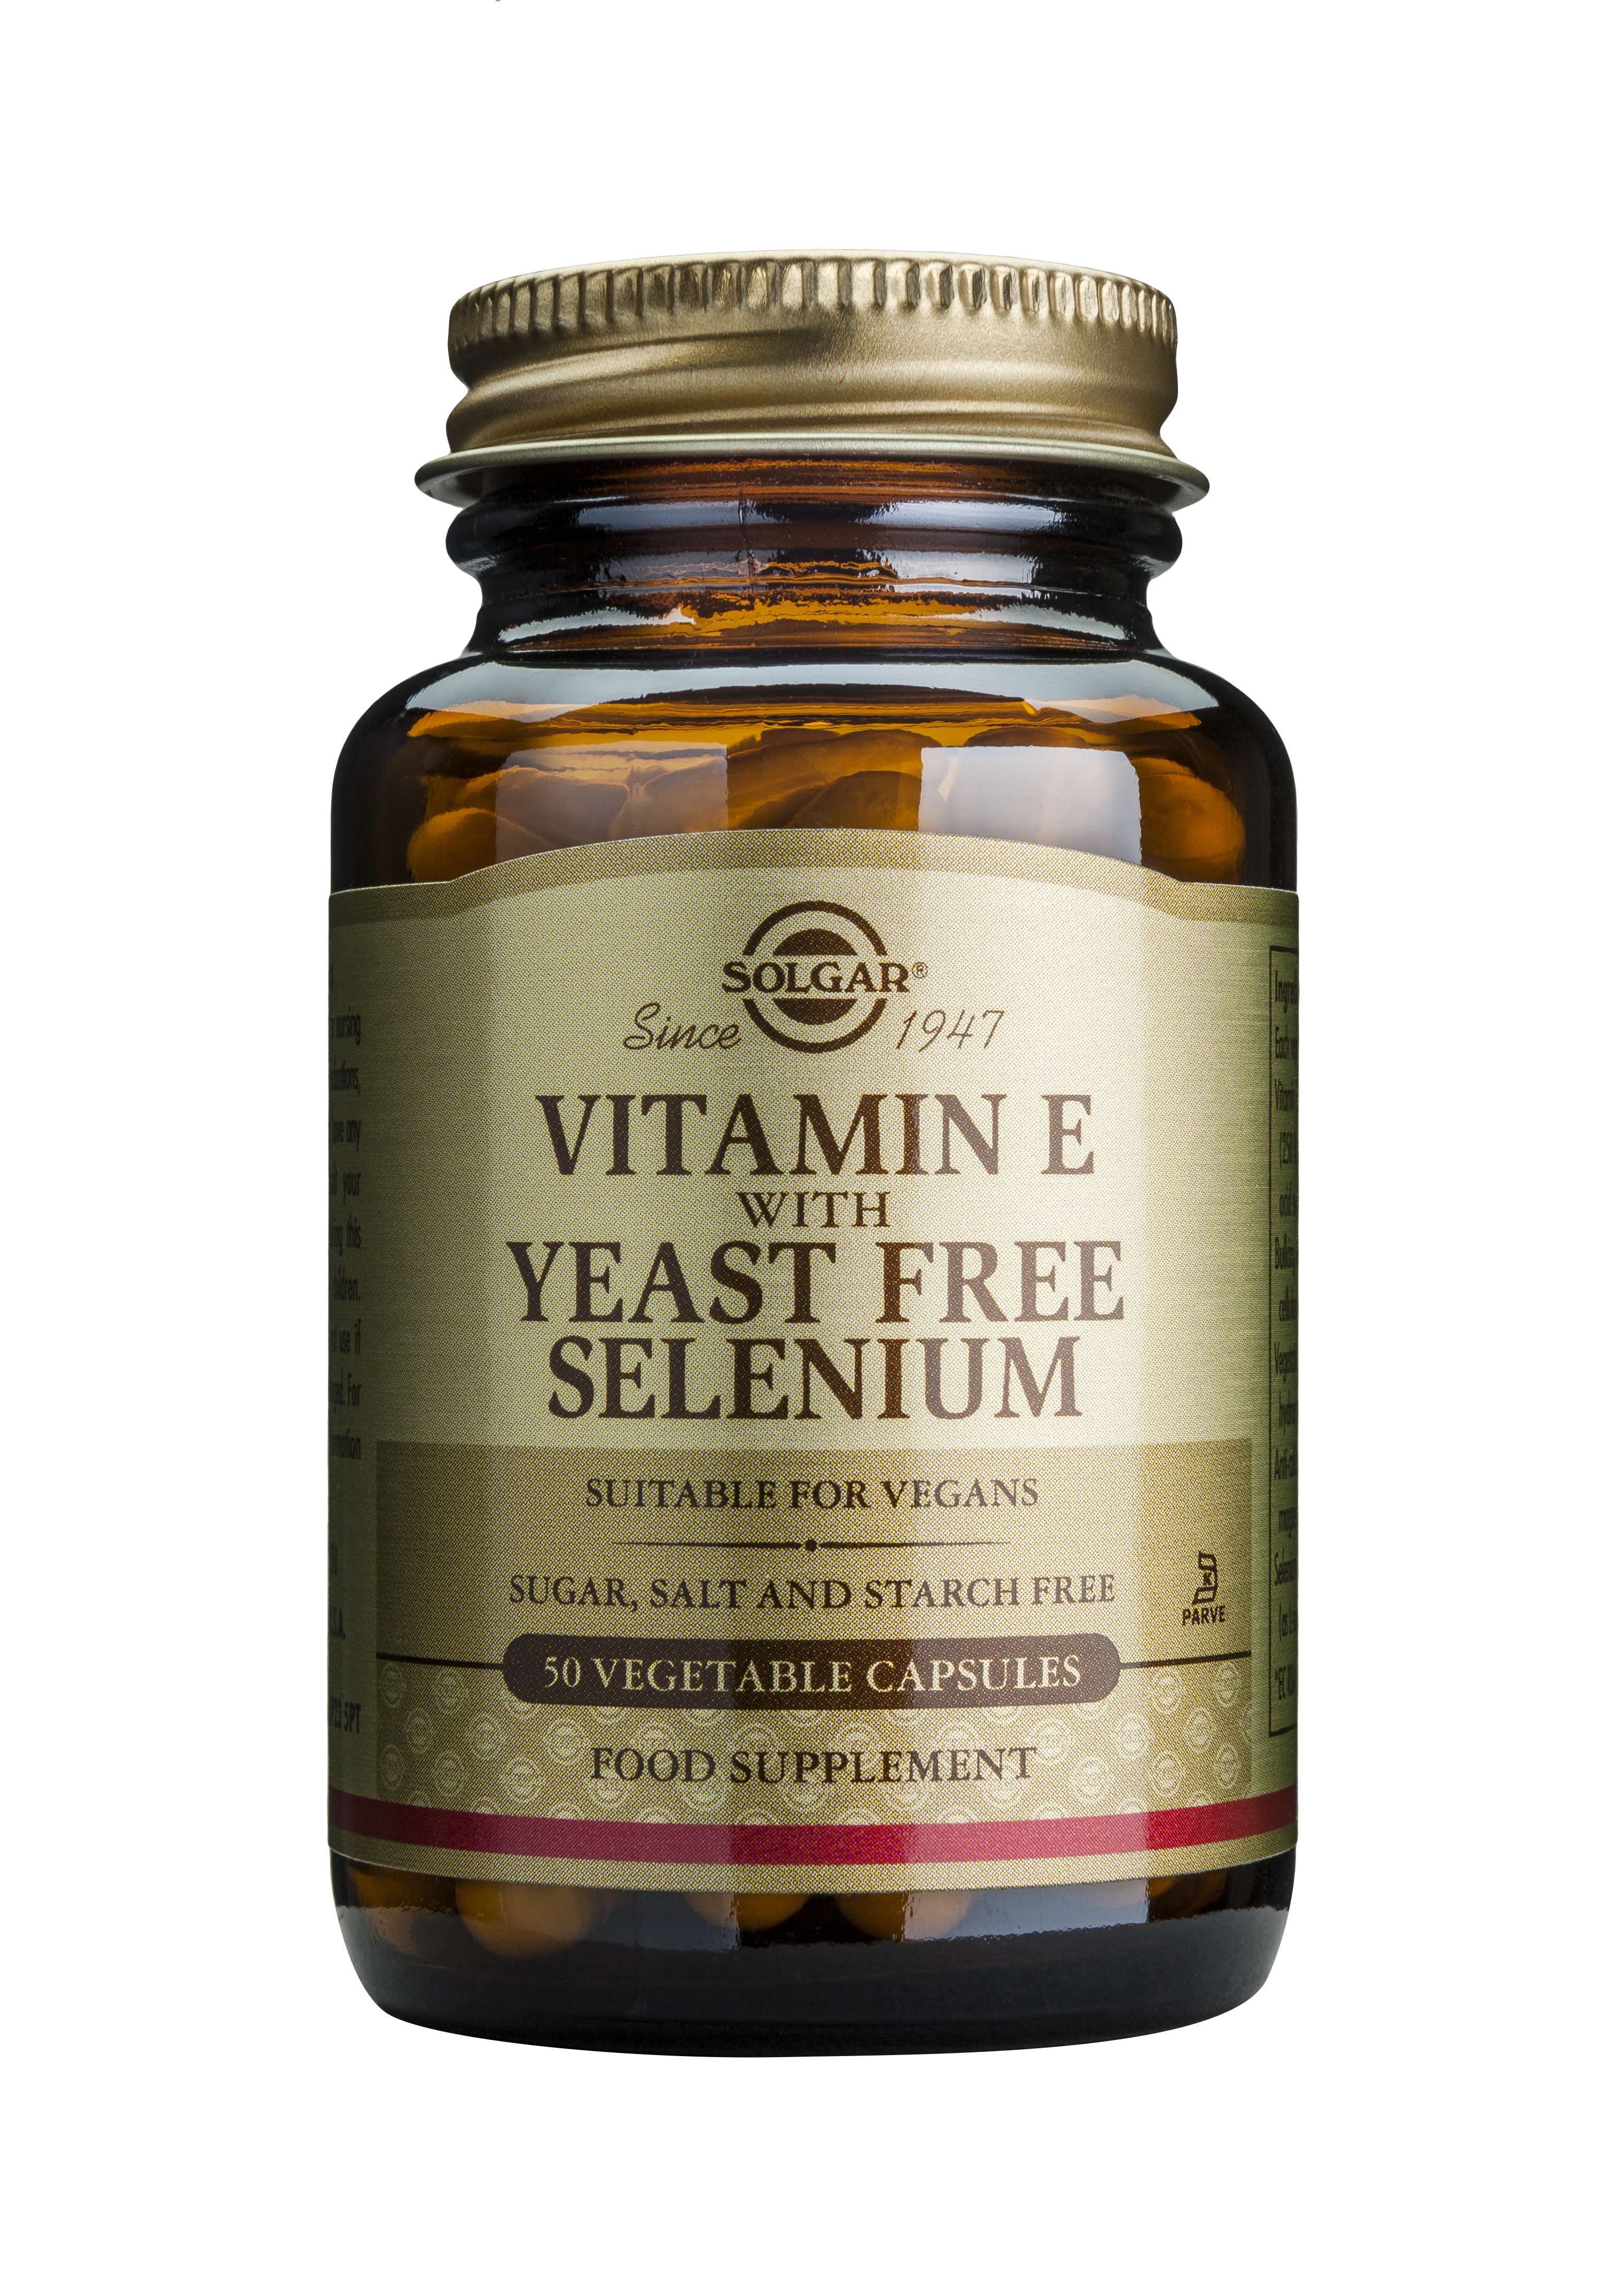 Solgar Vitamin E With Yeast Free Selenium 50 Veg.Caps